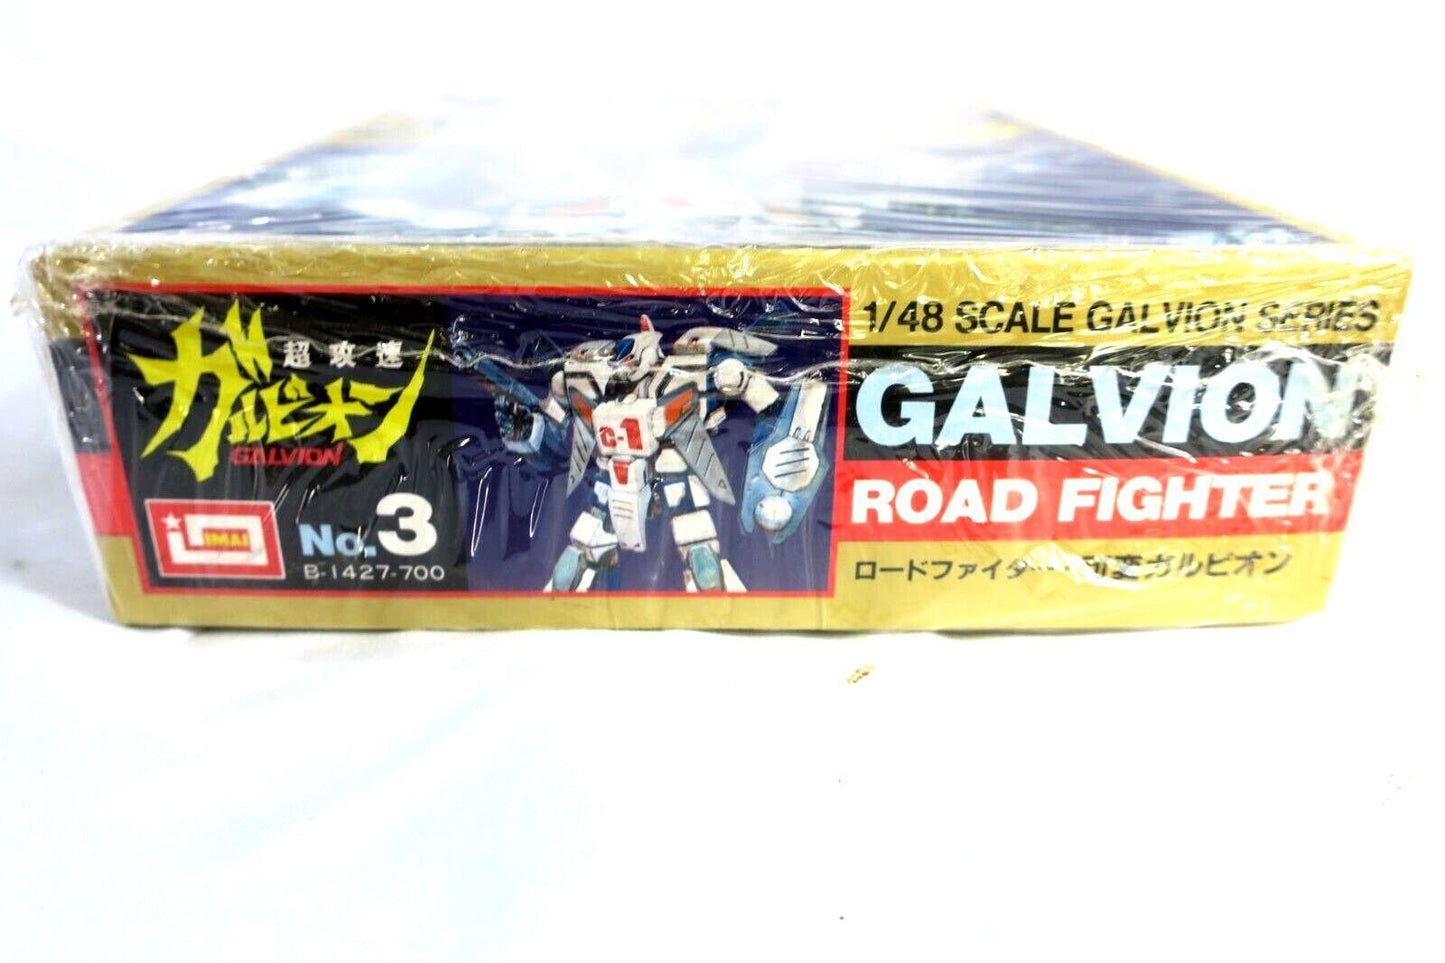 IMAI CHO KOSOKU GALVION ROAD FIGHTER 1/48 SCALE MODEL KIT 3  B- 1427-700 D12